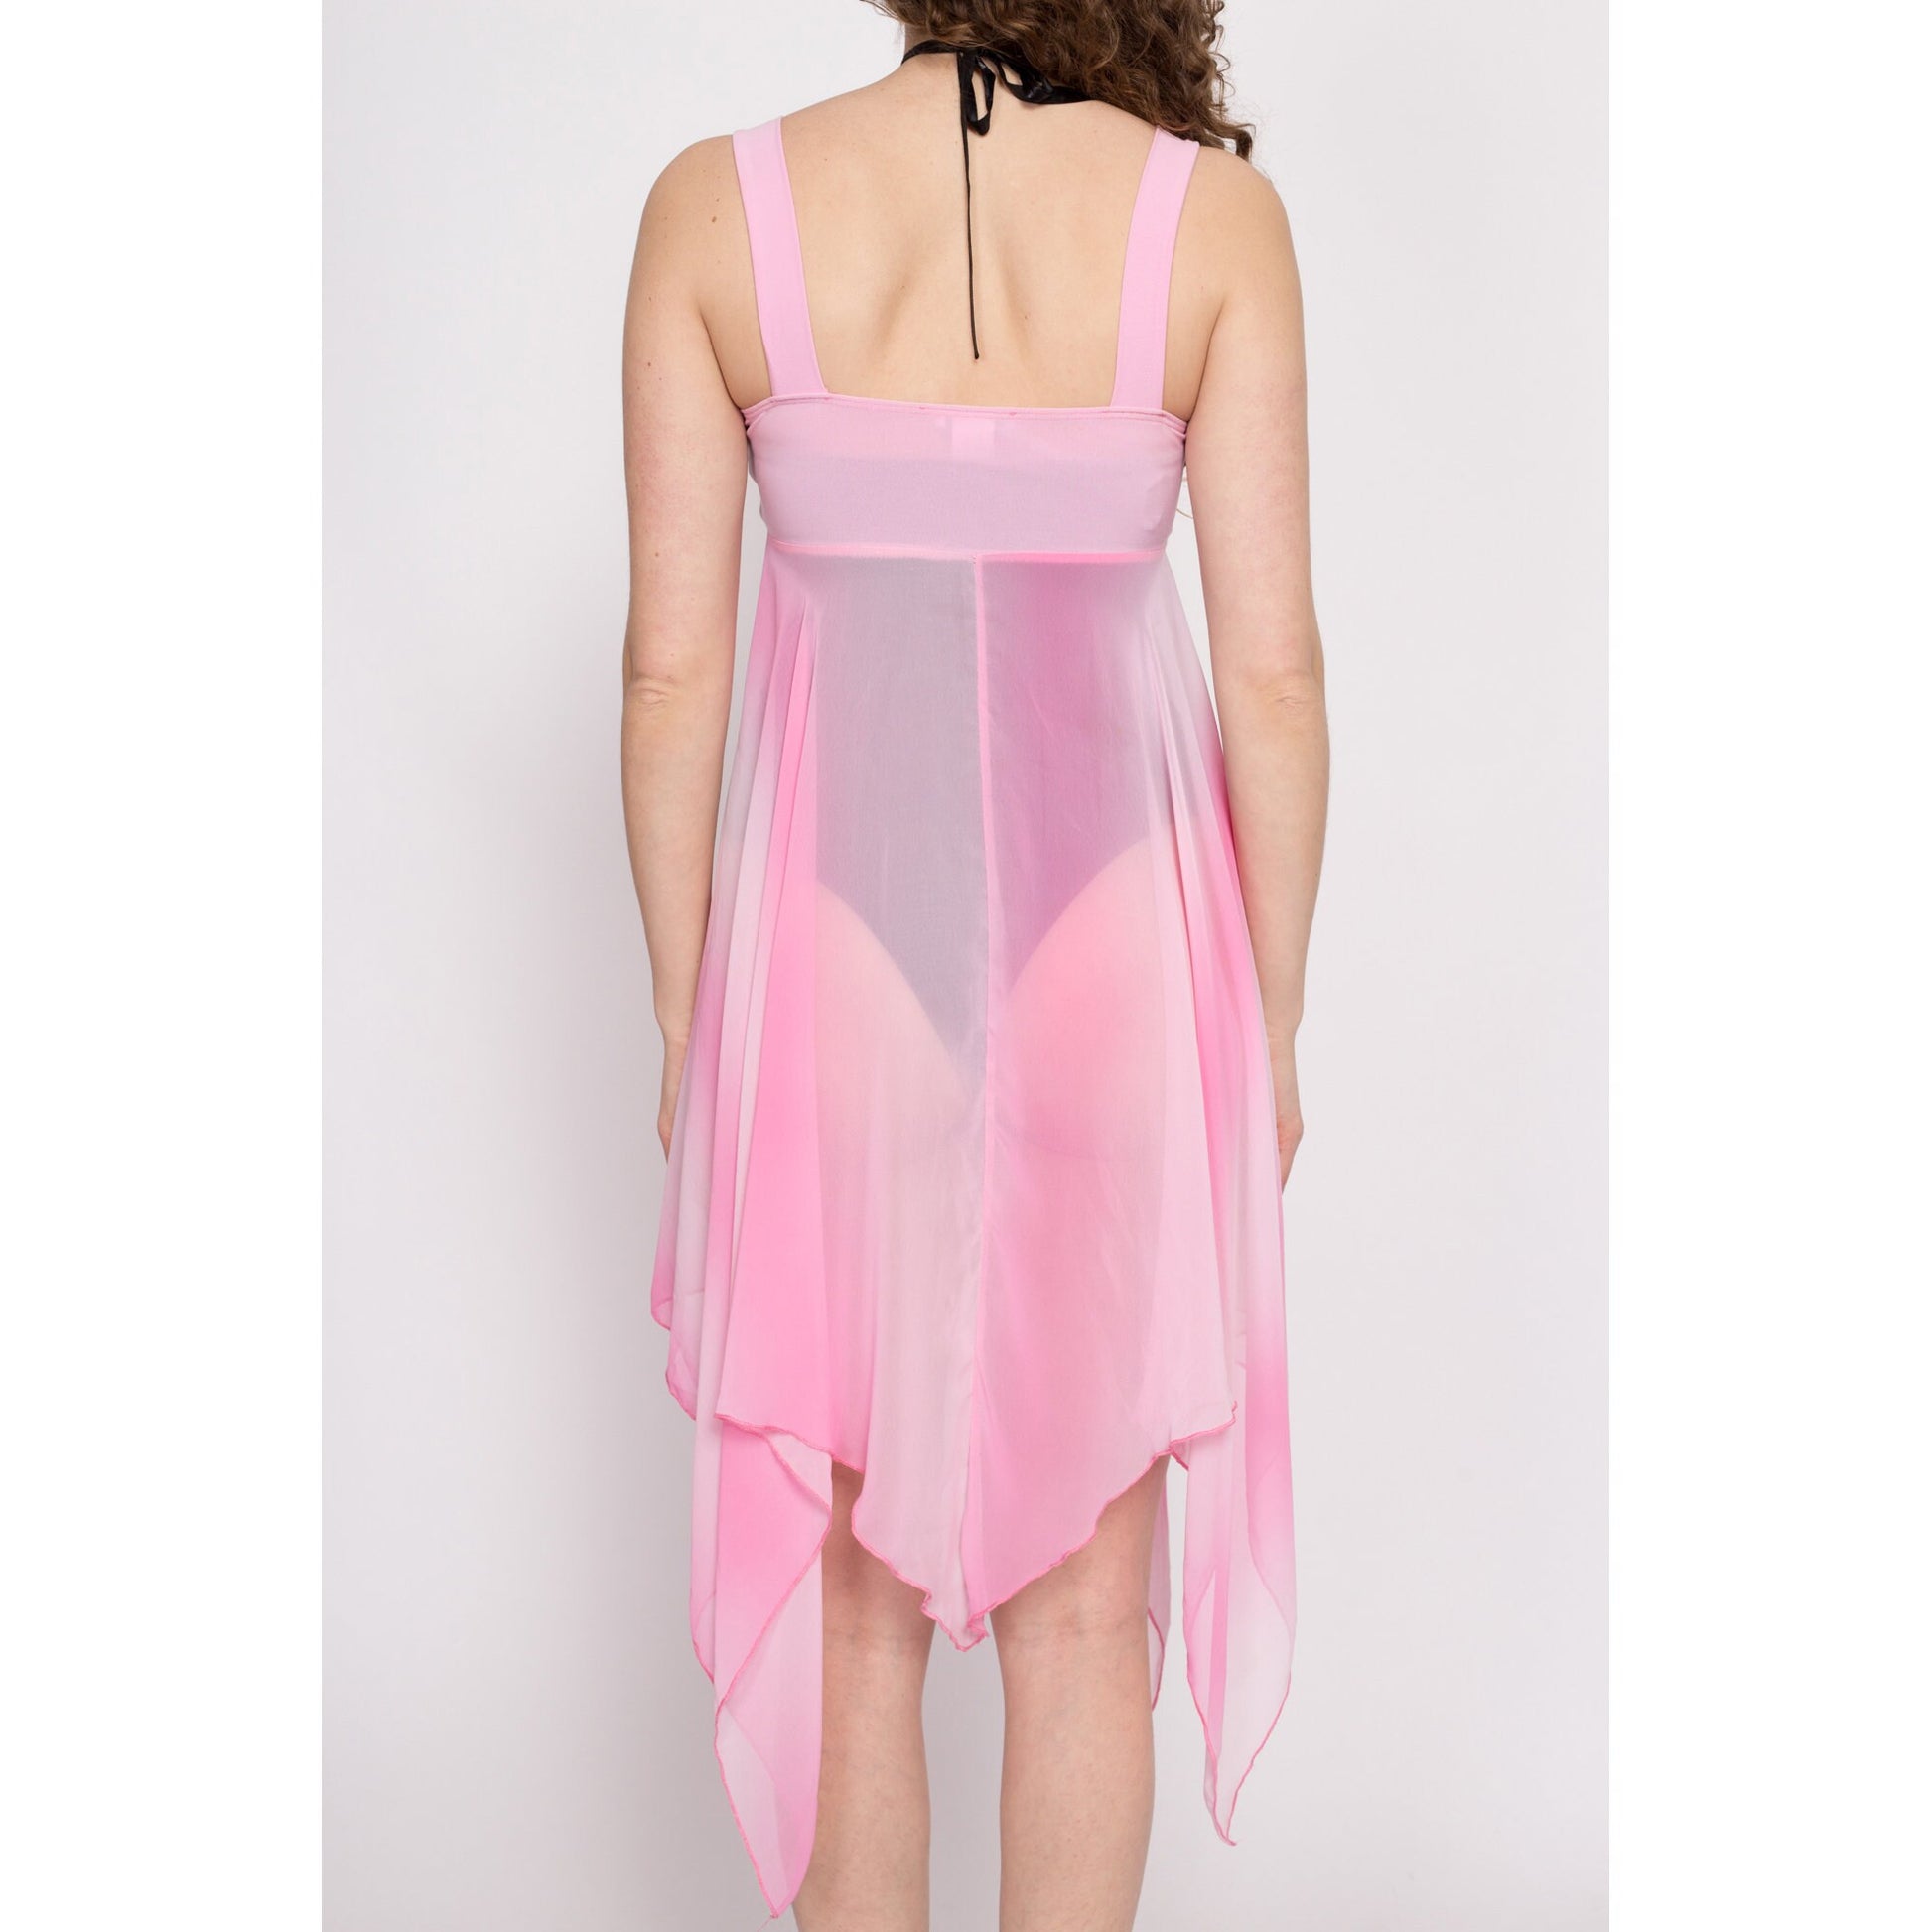 Y2K Sheer Pink Scarf Hem Dress - Small to Medium | Tie Dye Sequin Trim 2000s Midi Hanky Party Dress